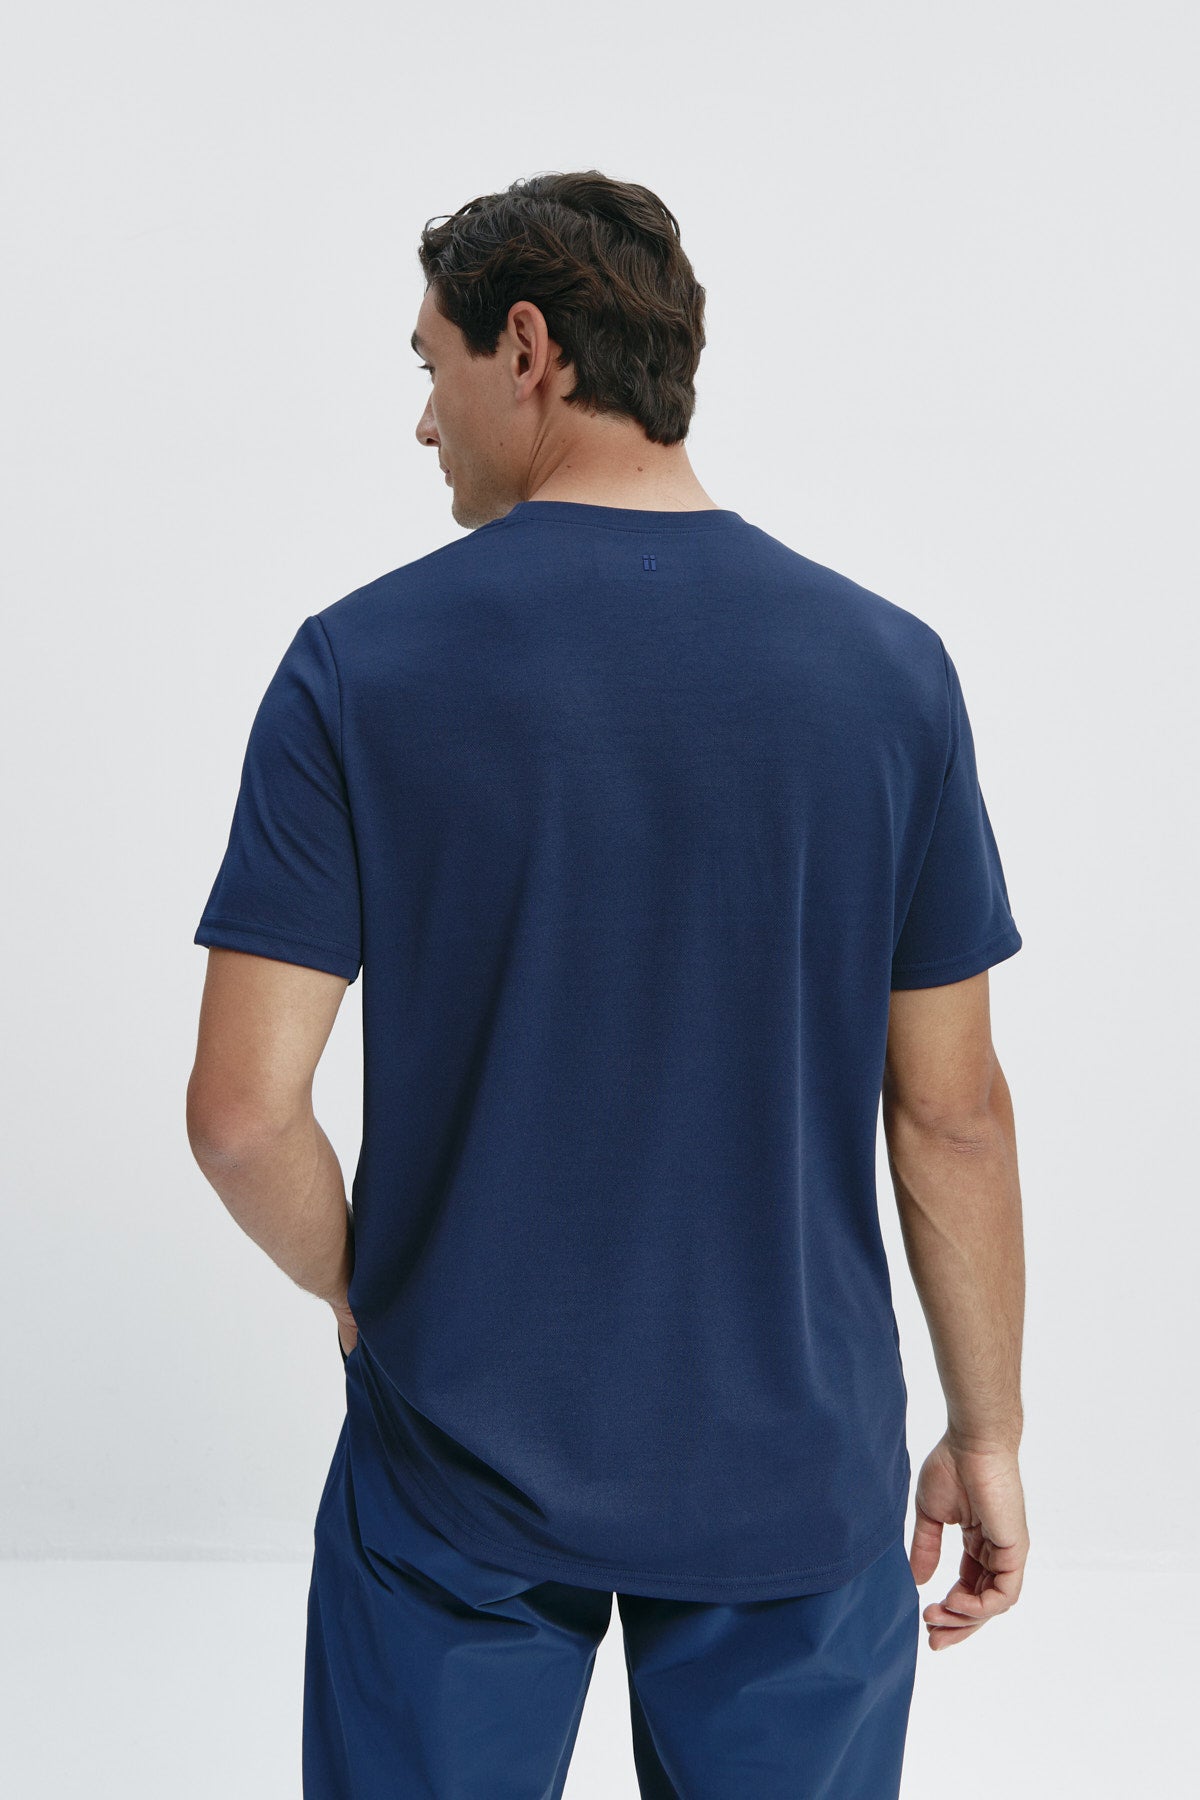 Camiseta de hombre azul zafiro: Camiseta de hombre azul zafiro de manga corta, antiarrugas y antimanchas. Foto espalda.